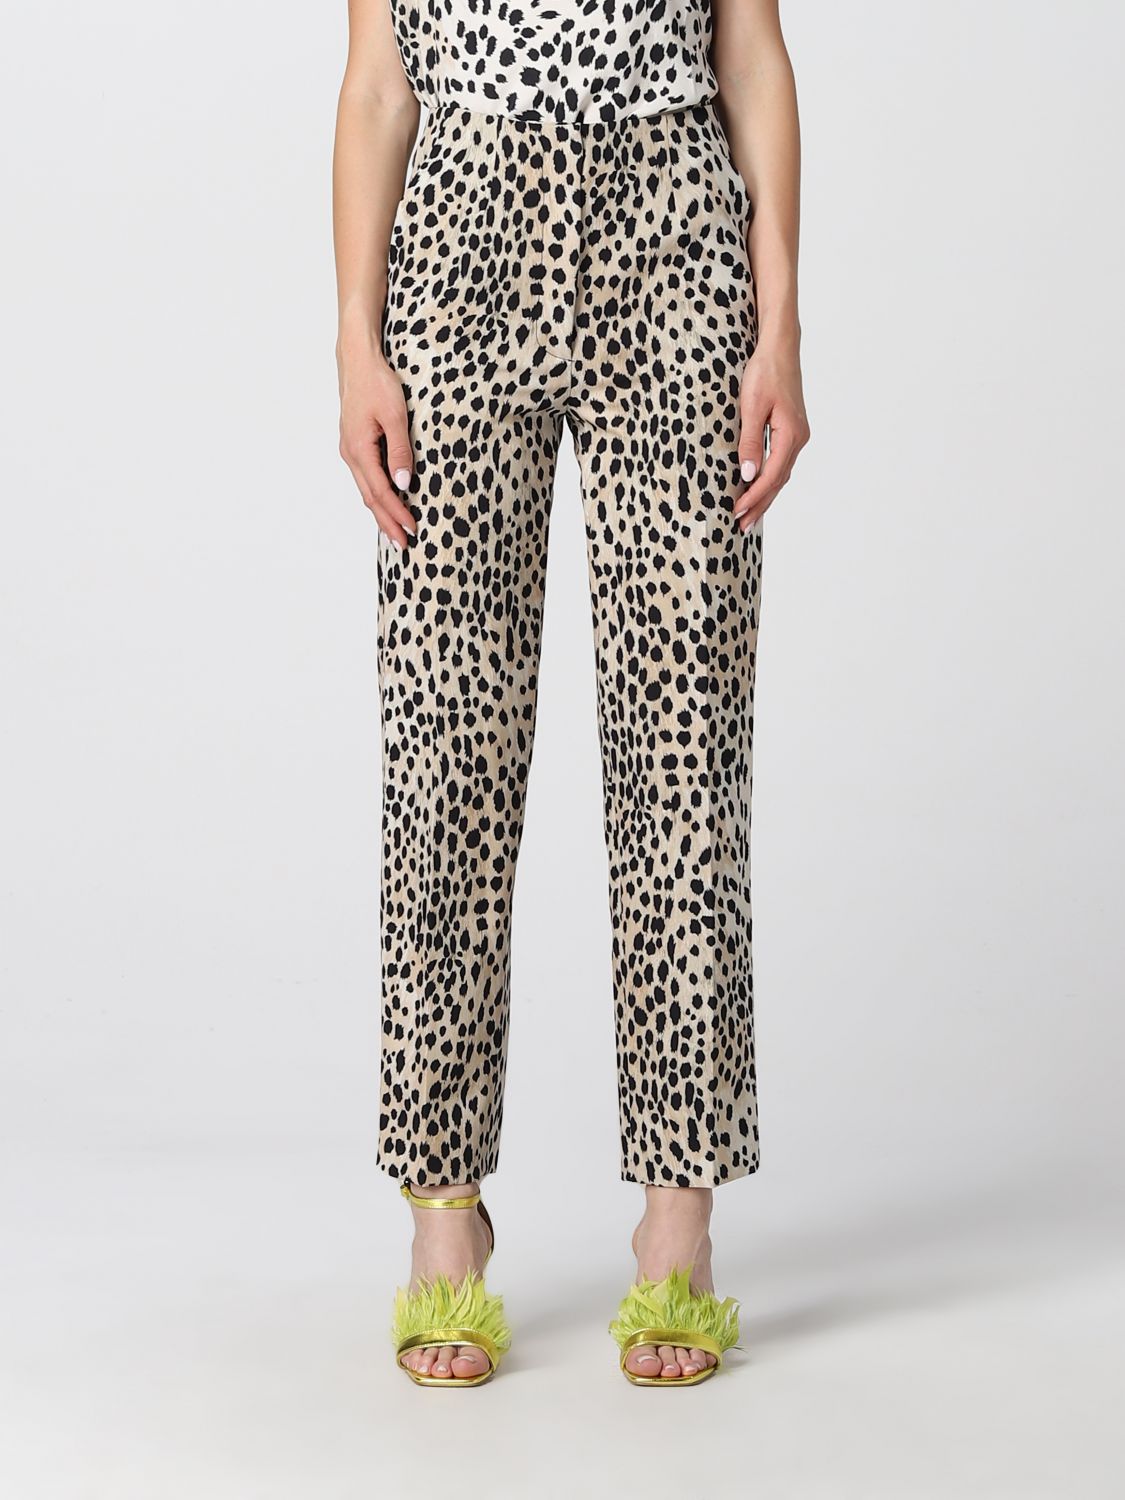 Trousers Just Cavalli: Just Cavalli leopard trousers natural 1